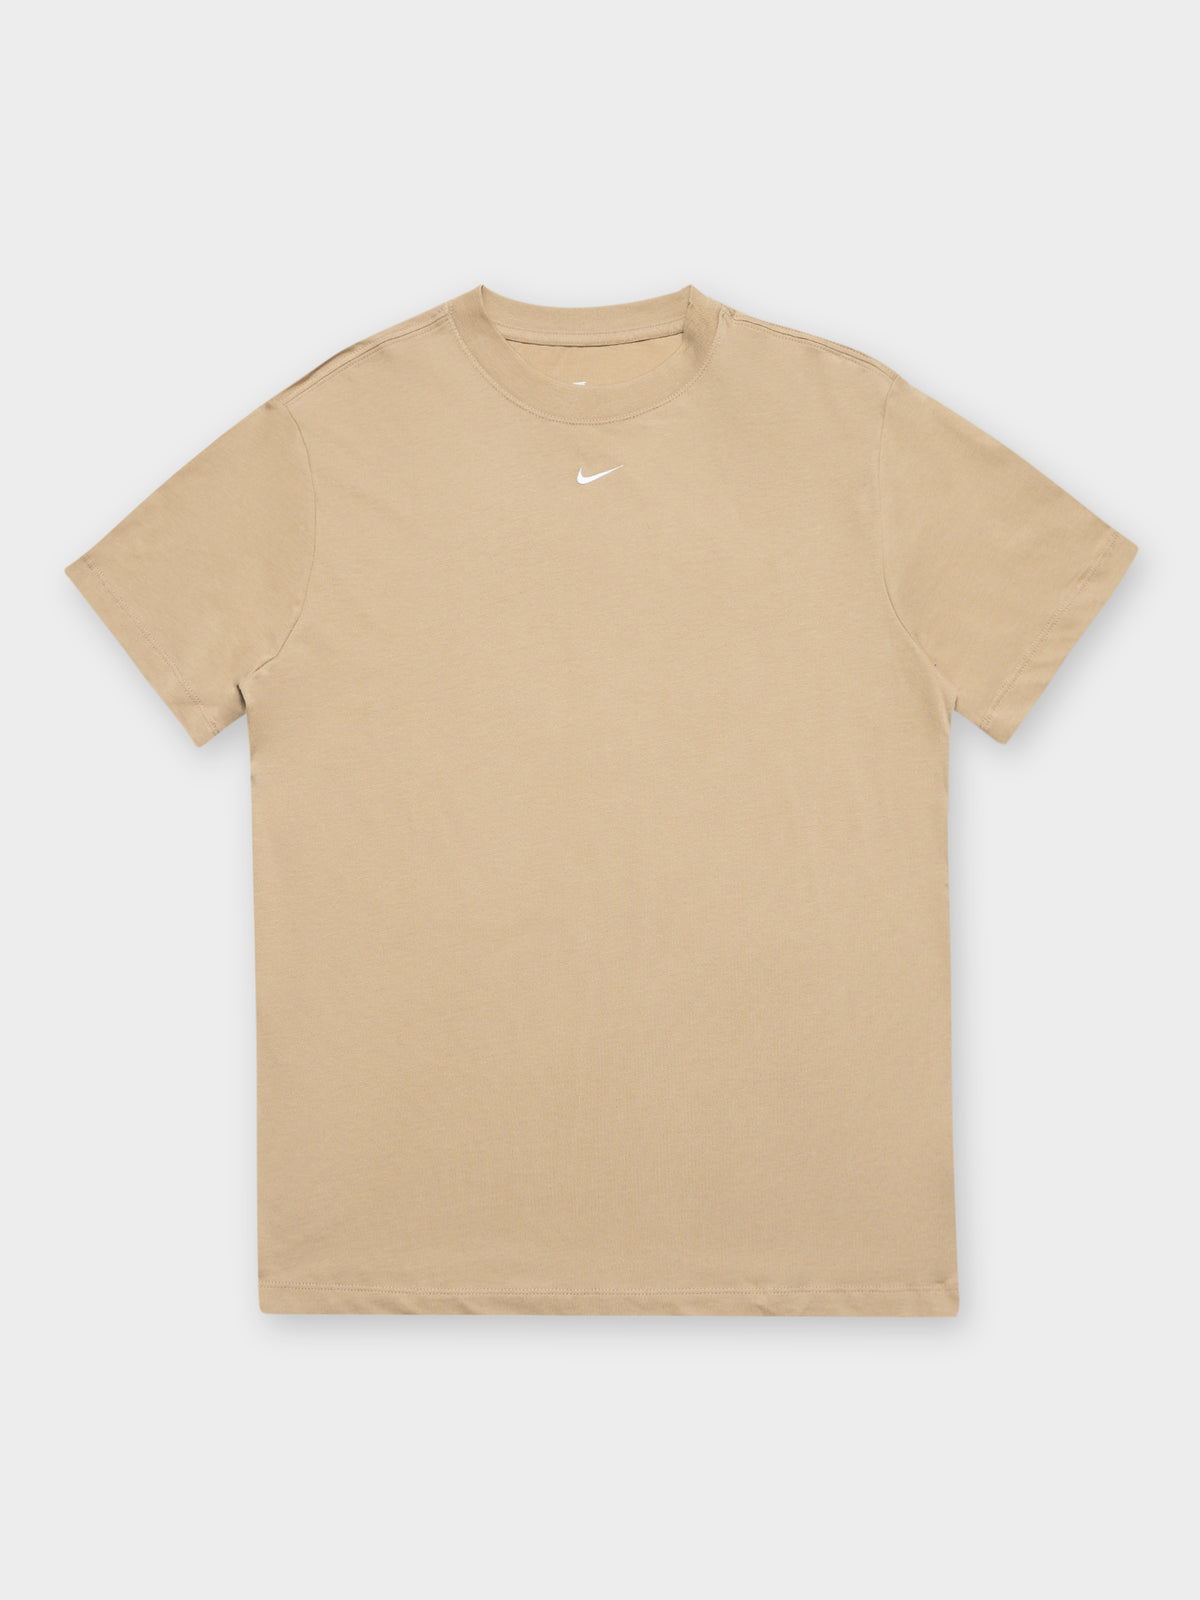 Sportswear Essential Boyfriend T-Shirt in Hemp